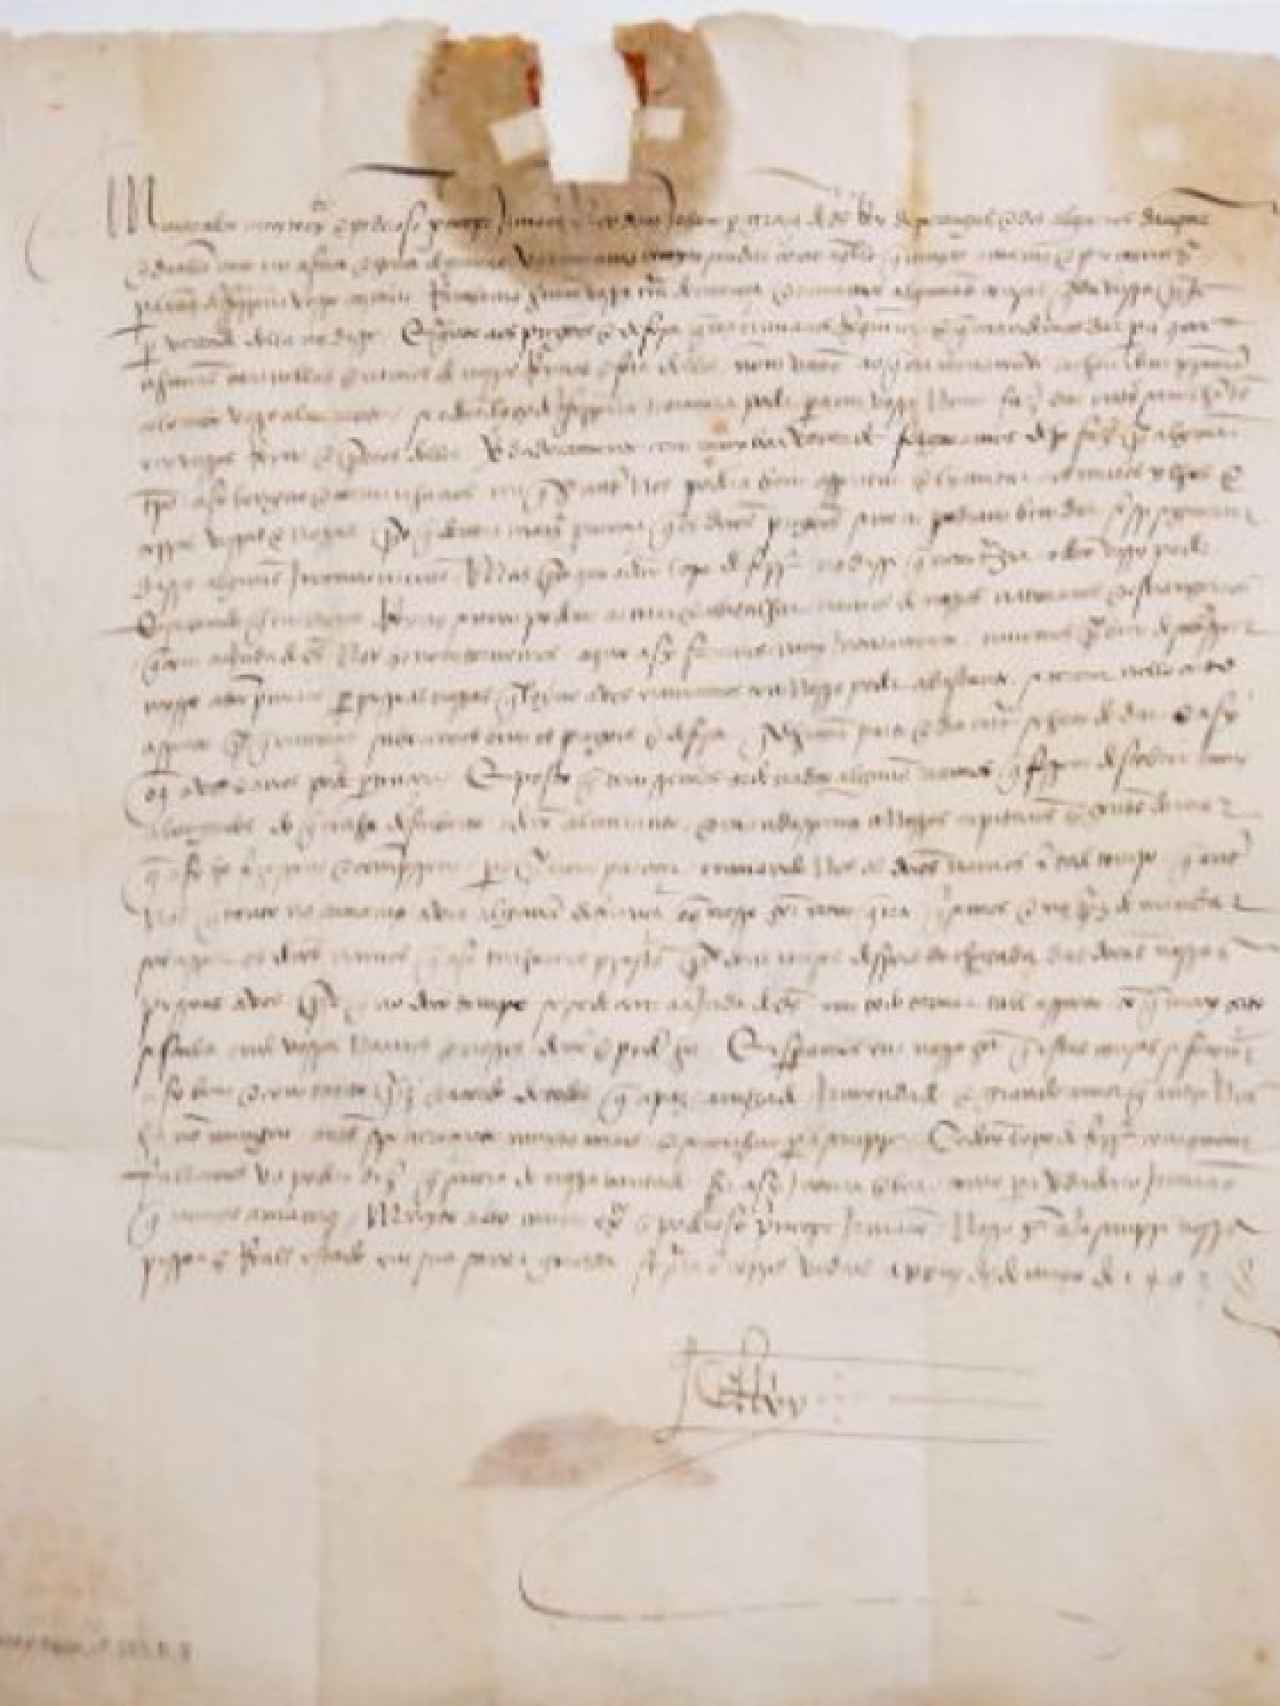 La otra carta de Juan II a Fernando el Católico, fechada el 25 de mayo de 1493.